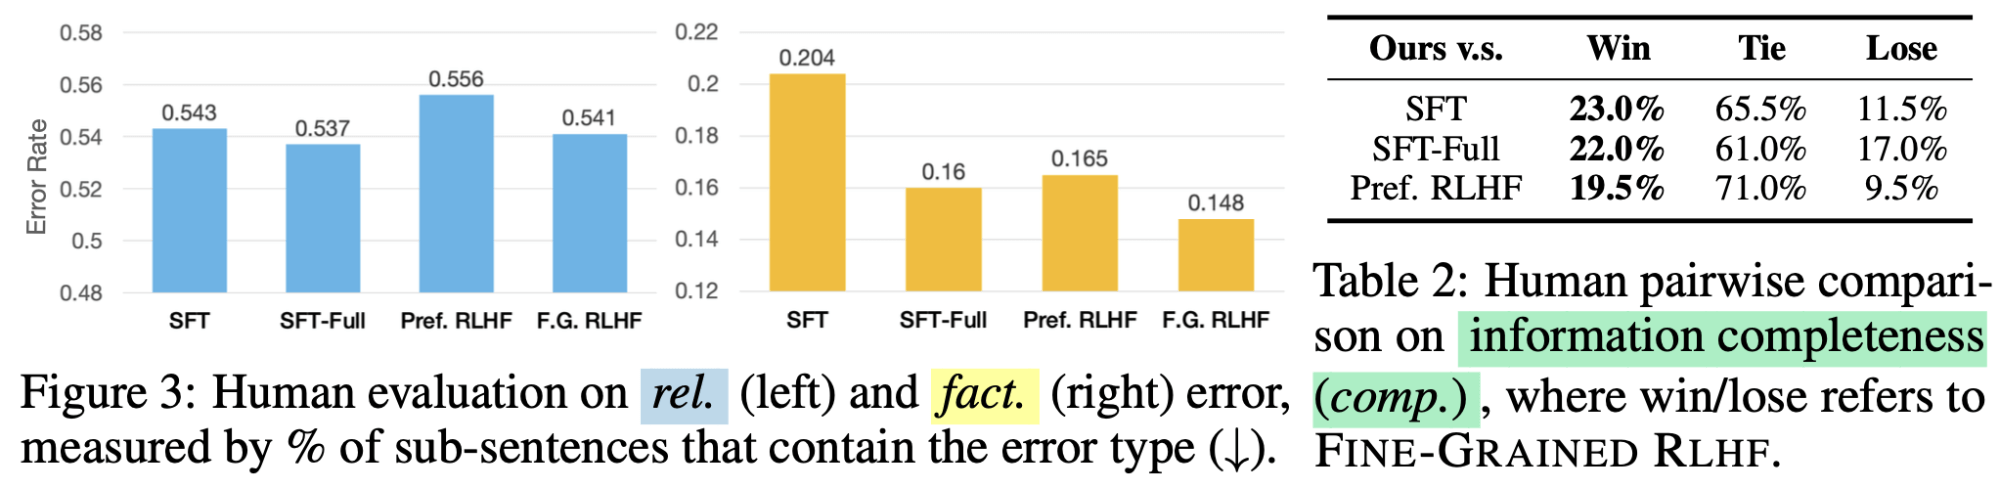 Bar chart and table comparisons of finetuning and RLHF made via human evaluation